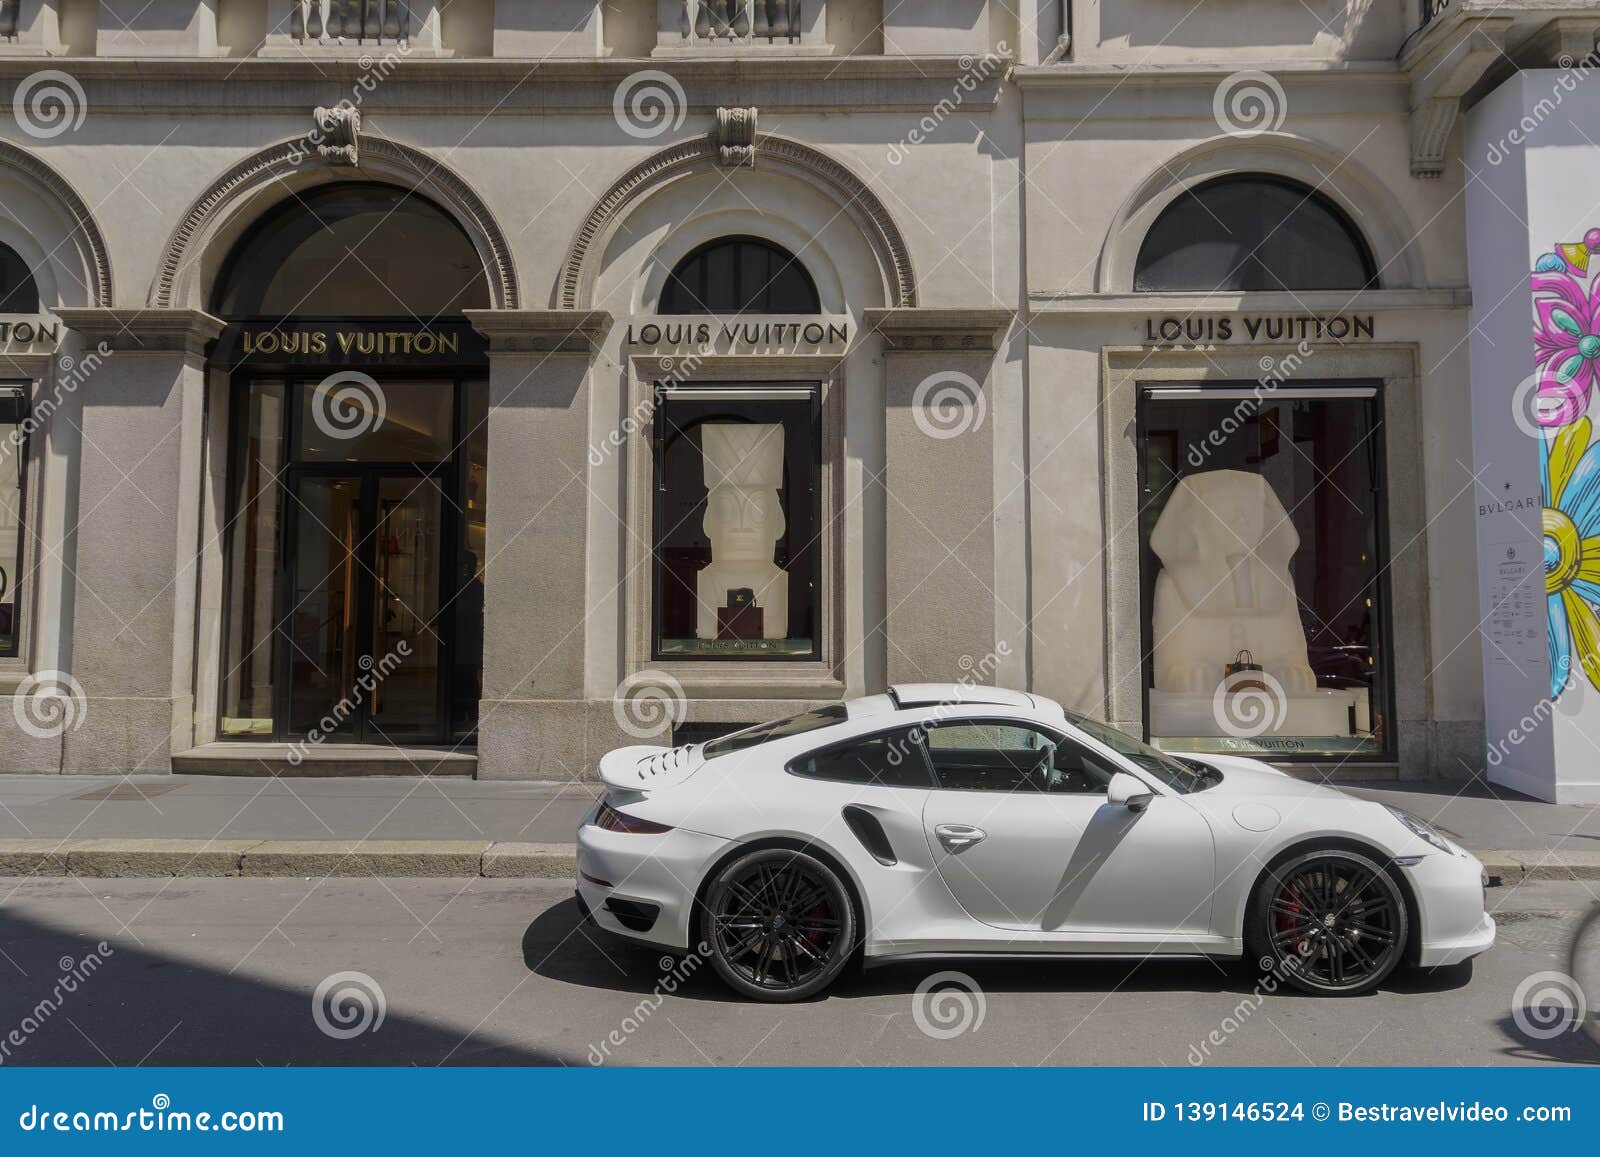 Milan,Italy Via Monte Napoleone Upscale Shopping Street With